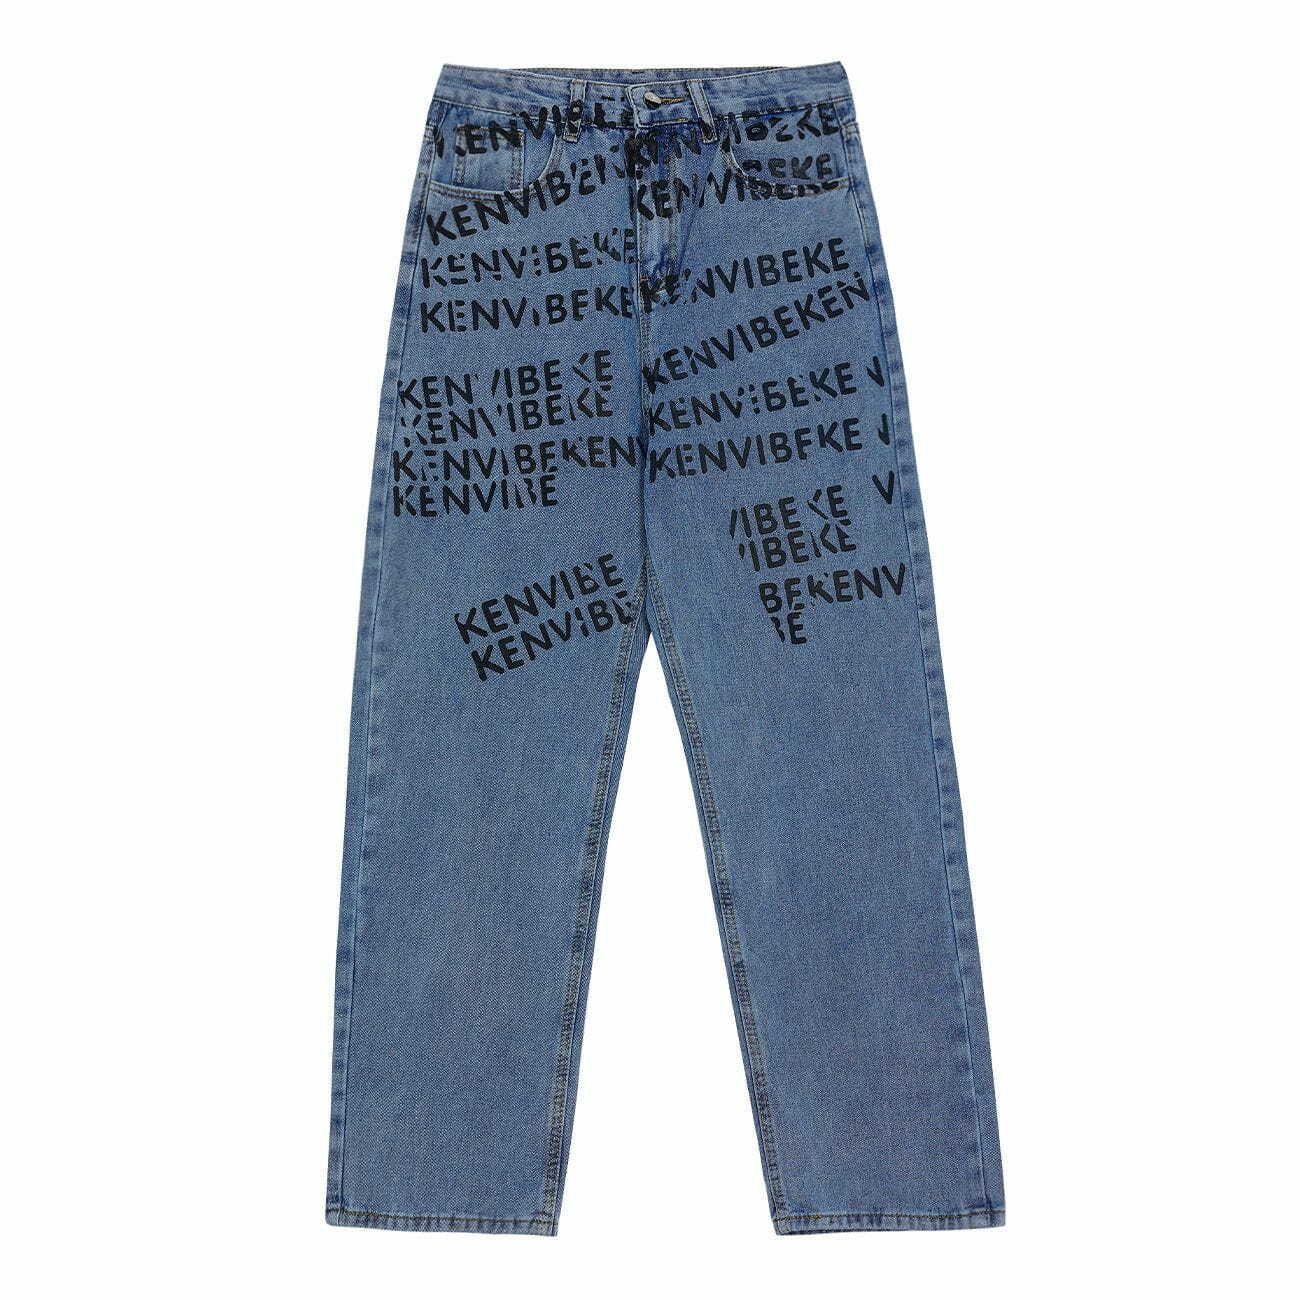 custom letter print jeans edgy & youthful denim 8722